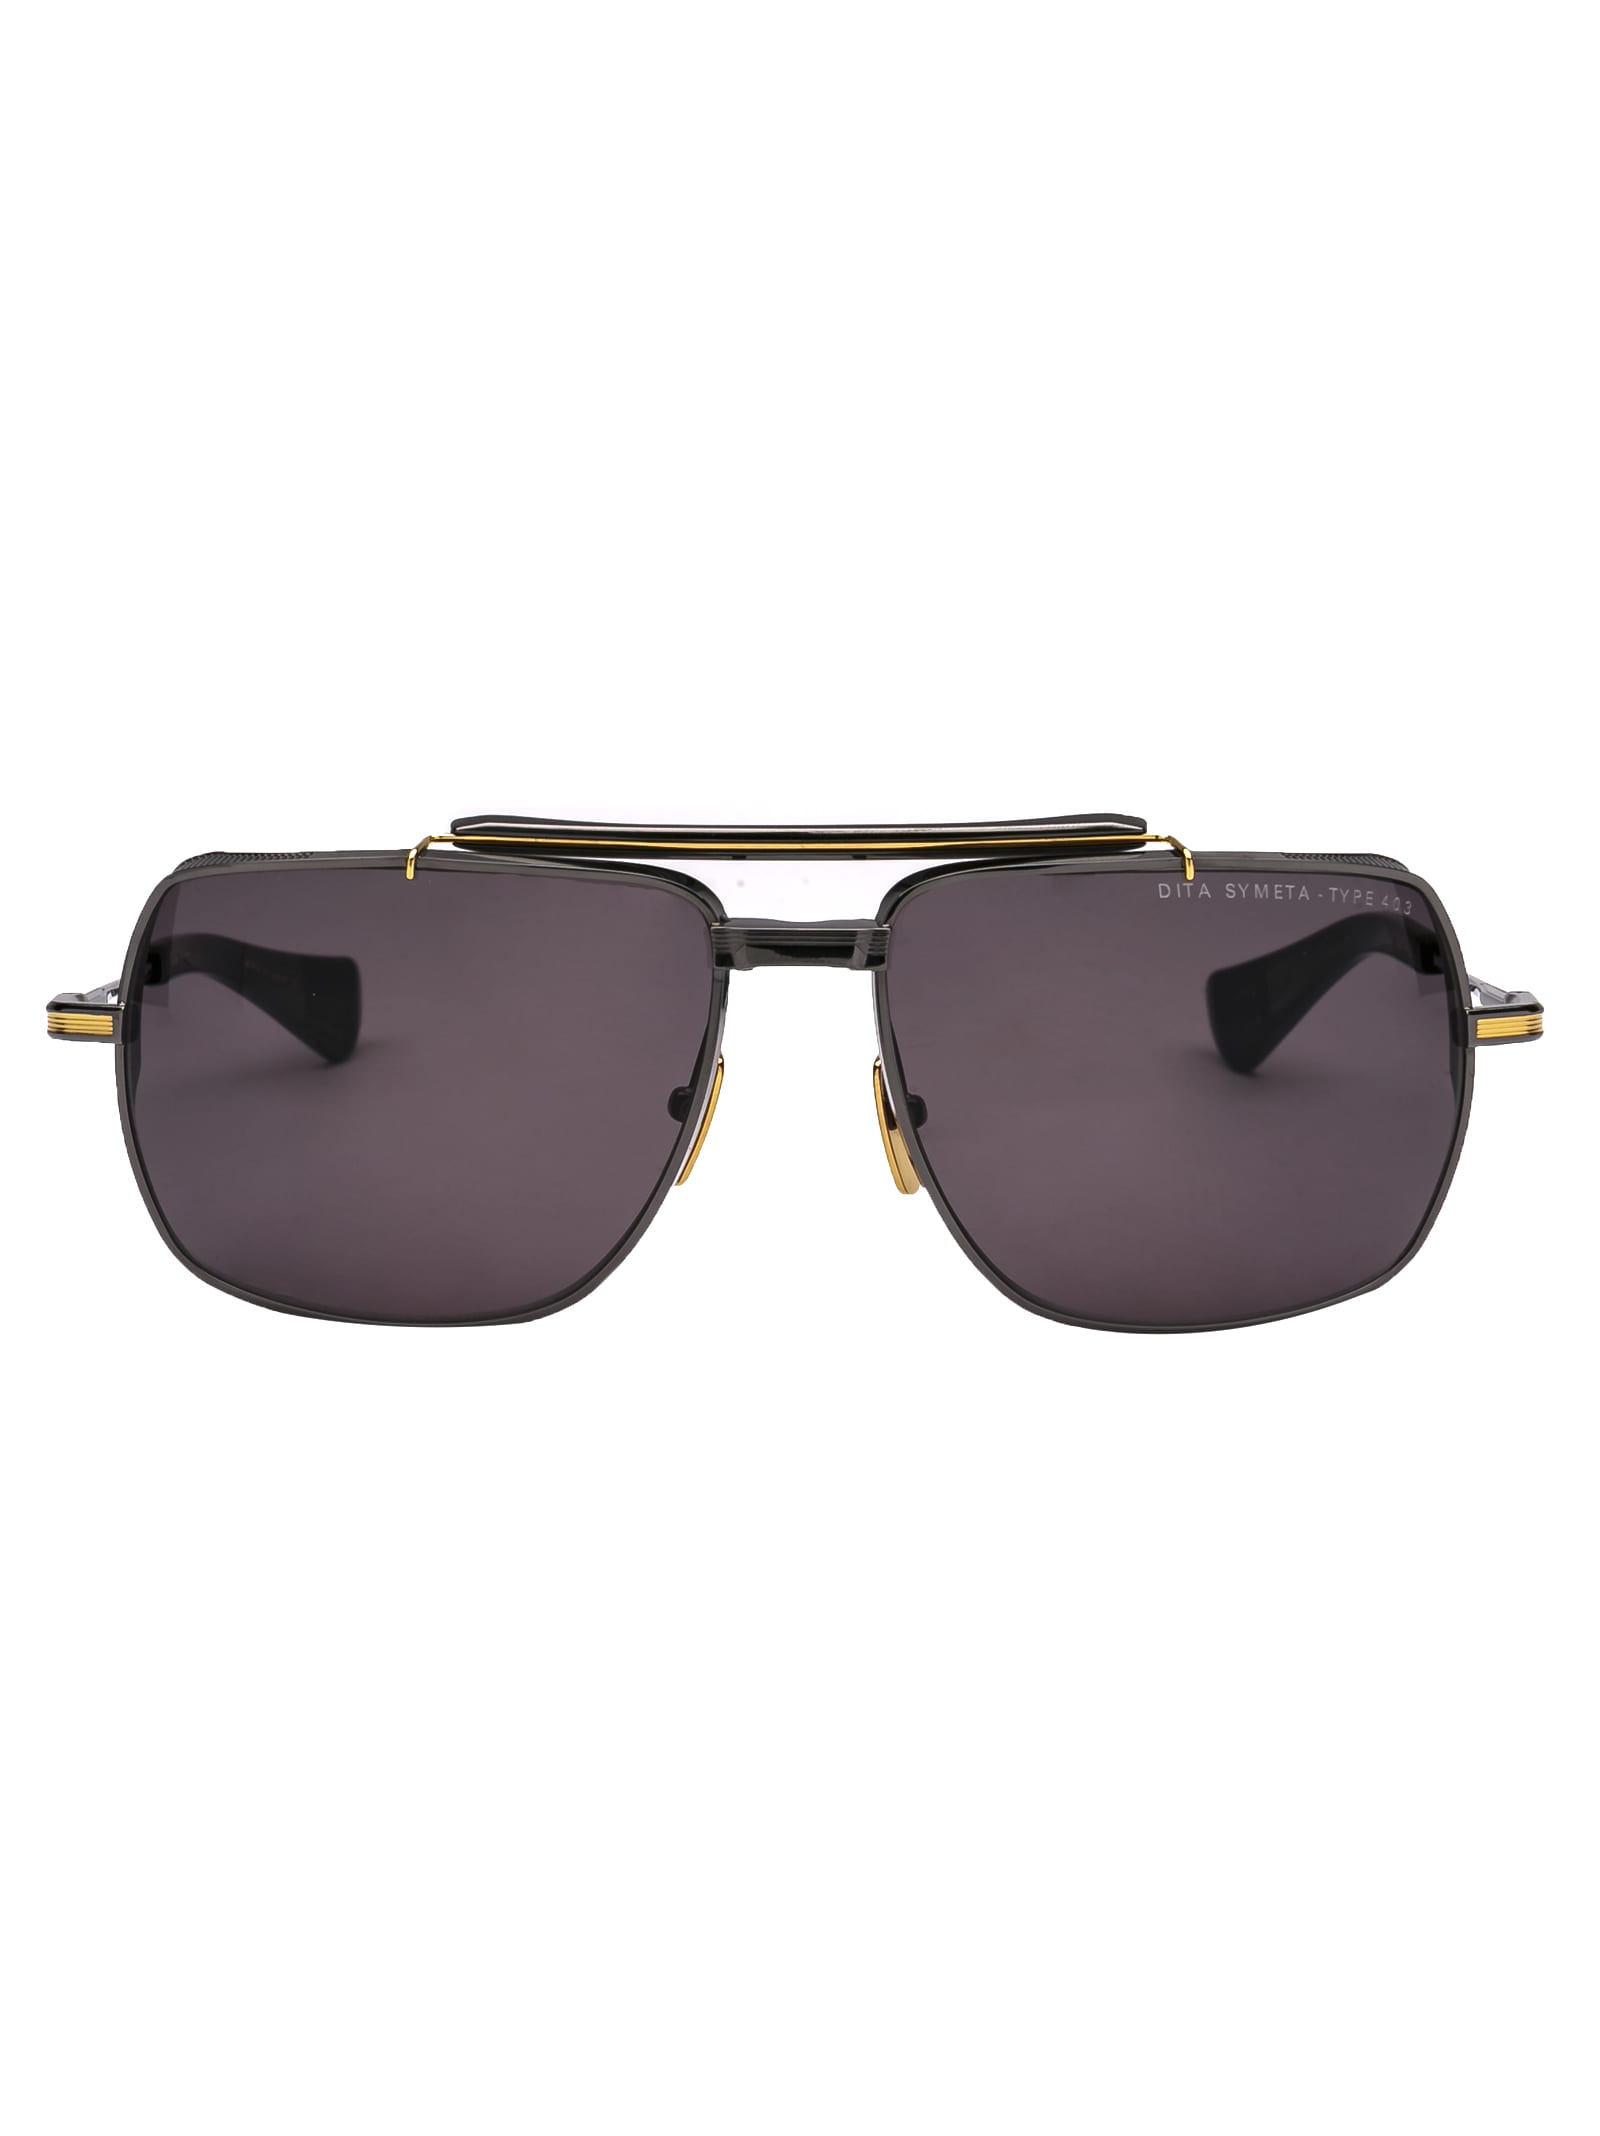 Symeta - Type 403 Sunglasses